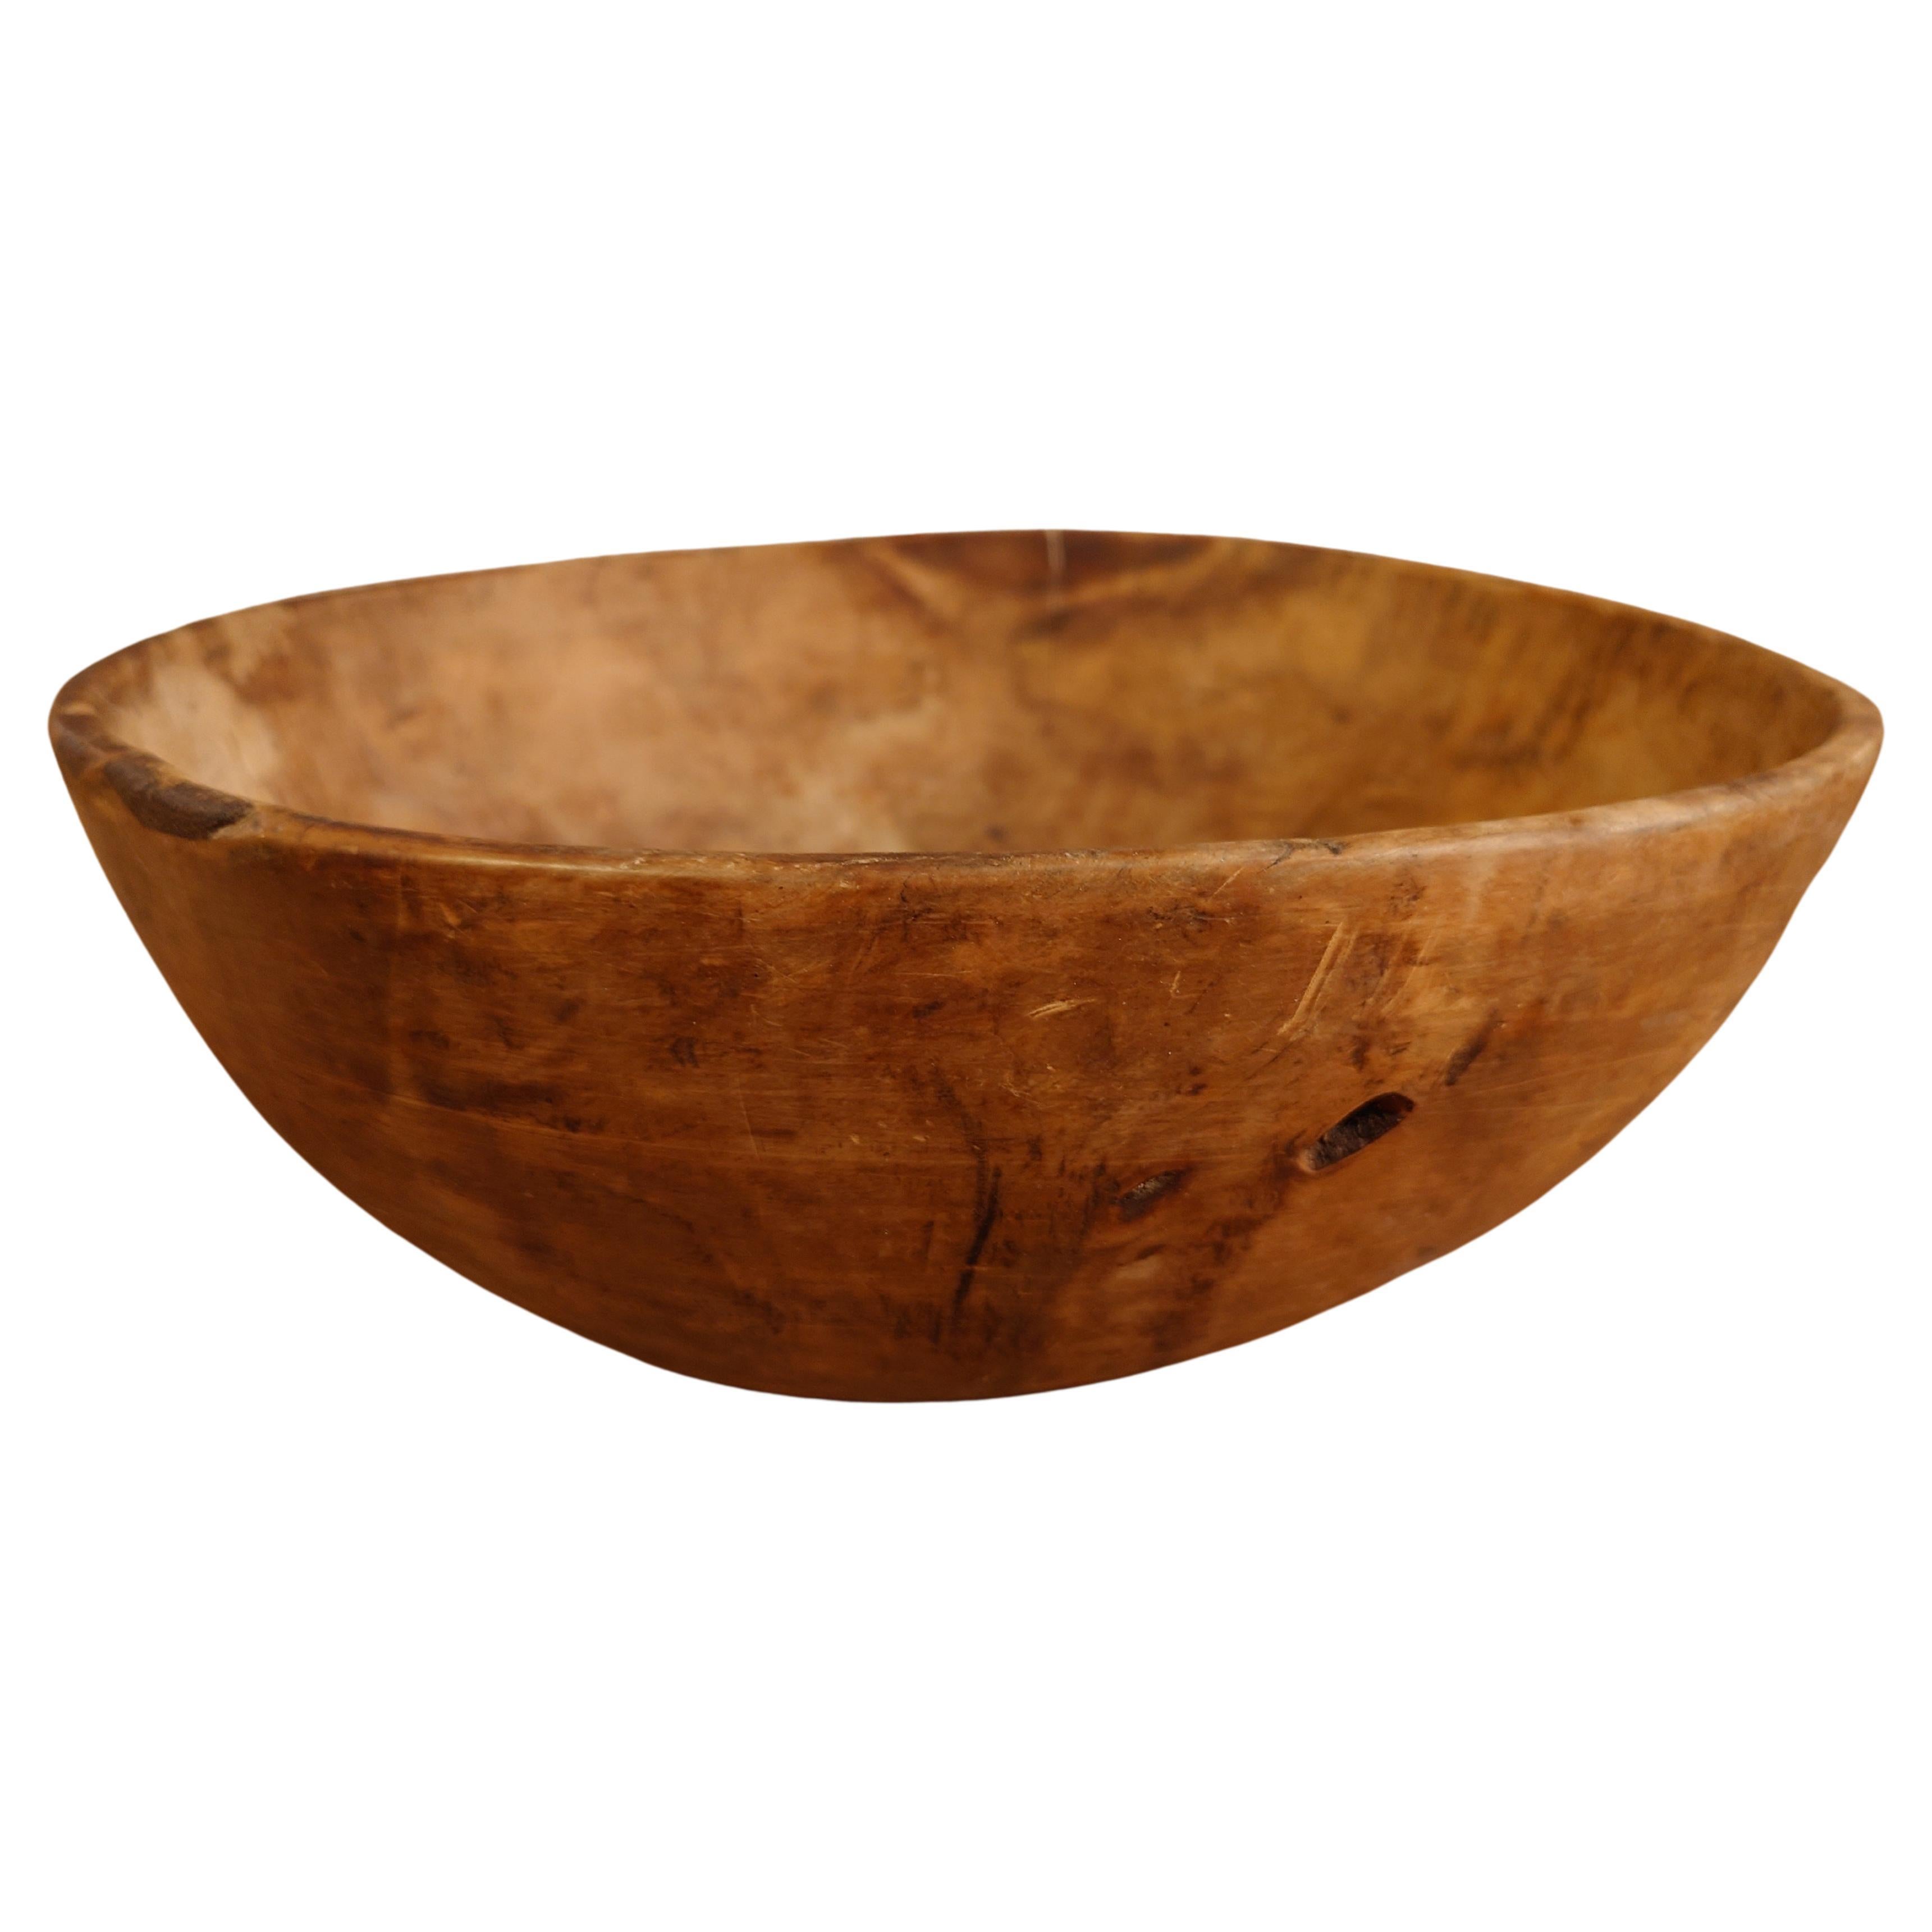 19th Century, Swedish, Antique Rustic Folk Art Wooden Bowl with Nice Patina